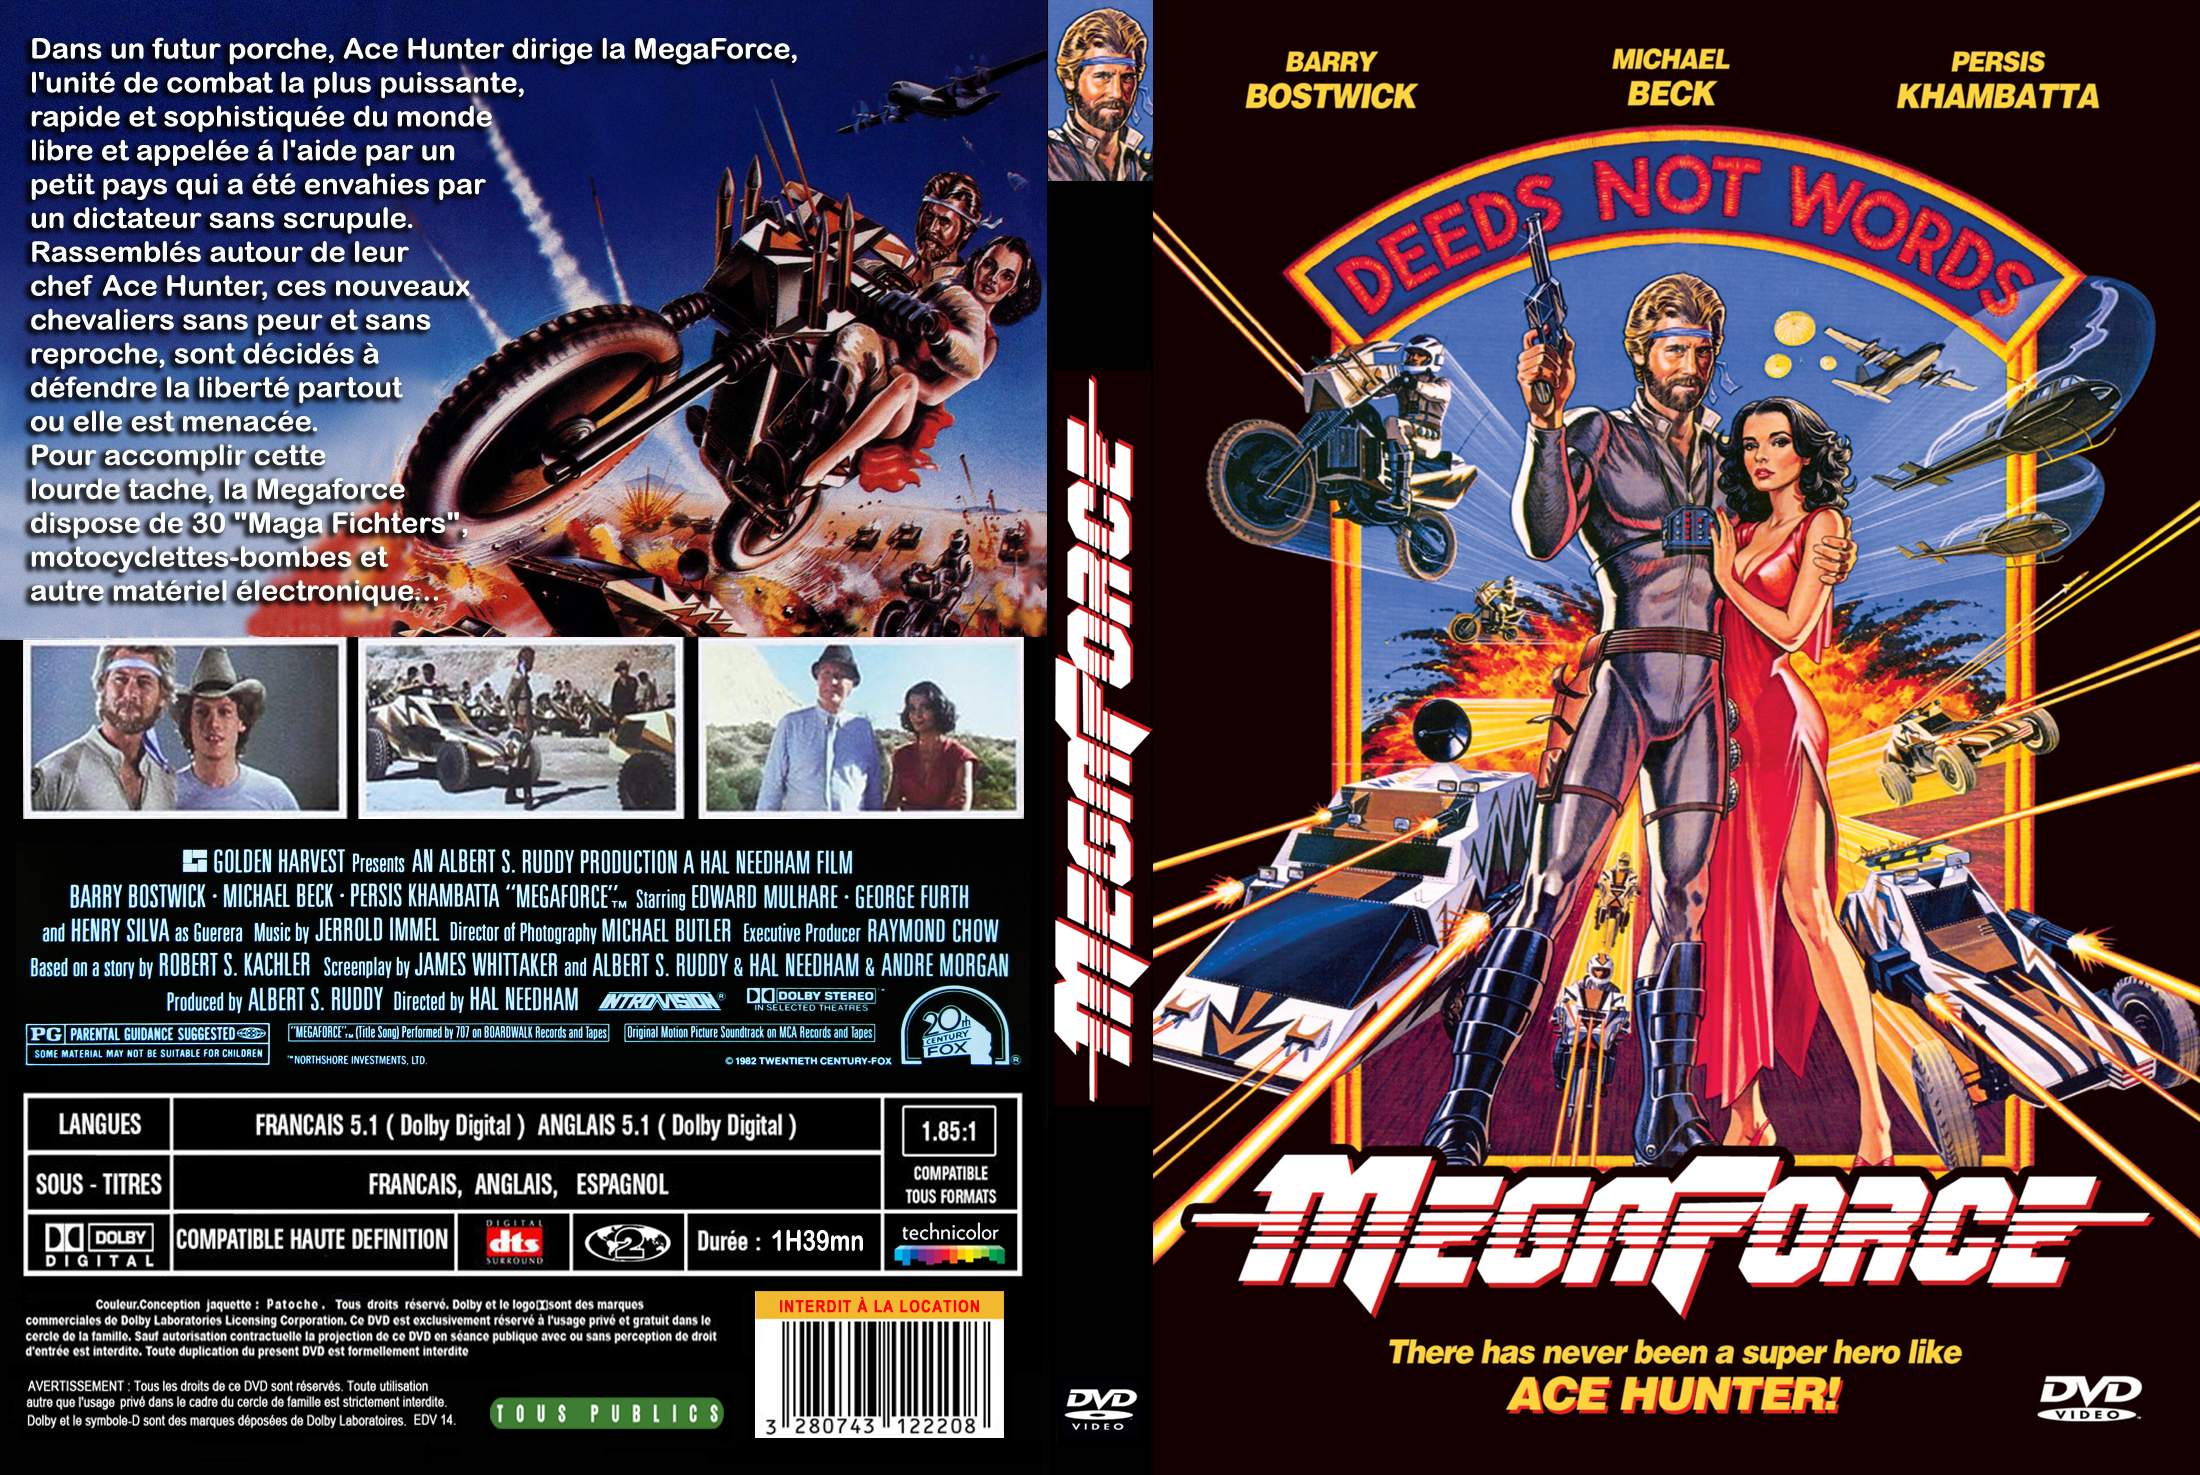 Jaquette DVD Megaforce custom